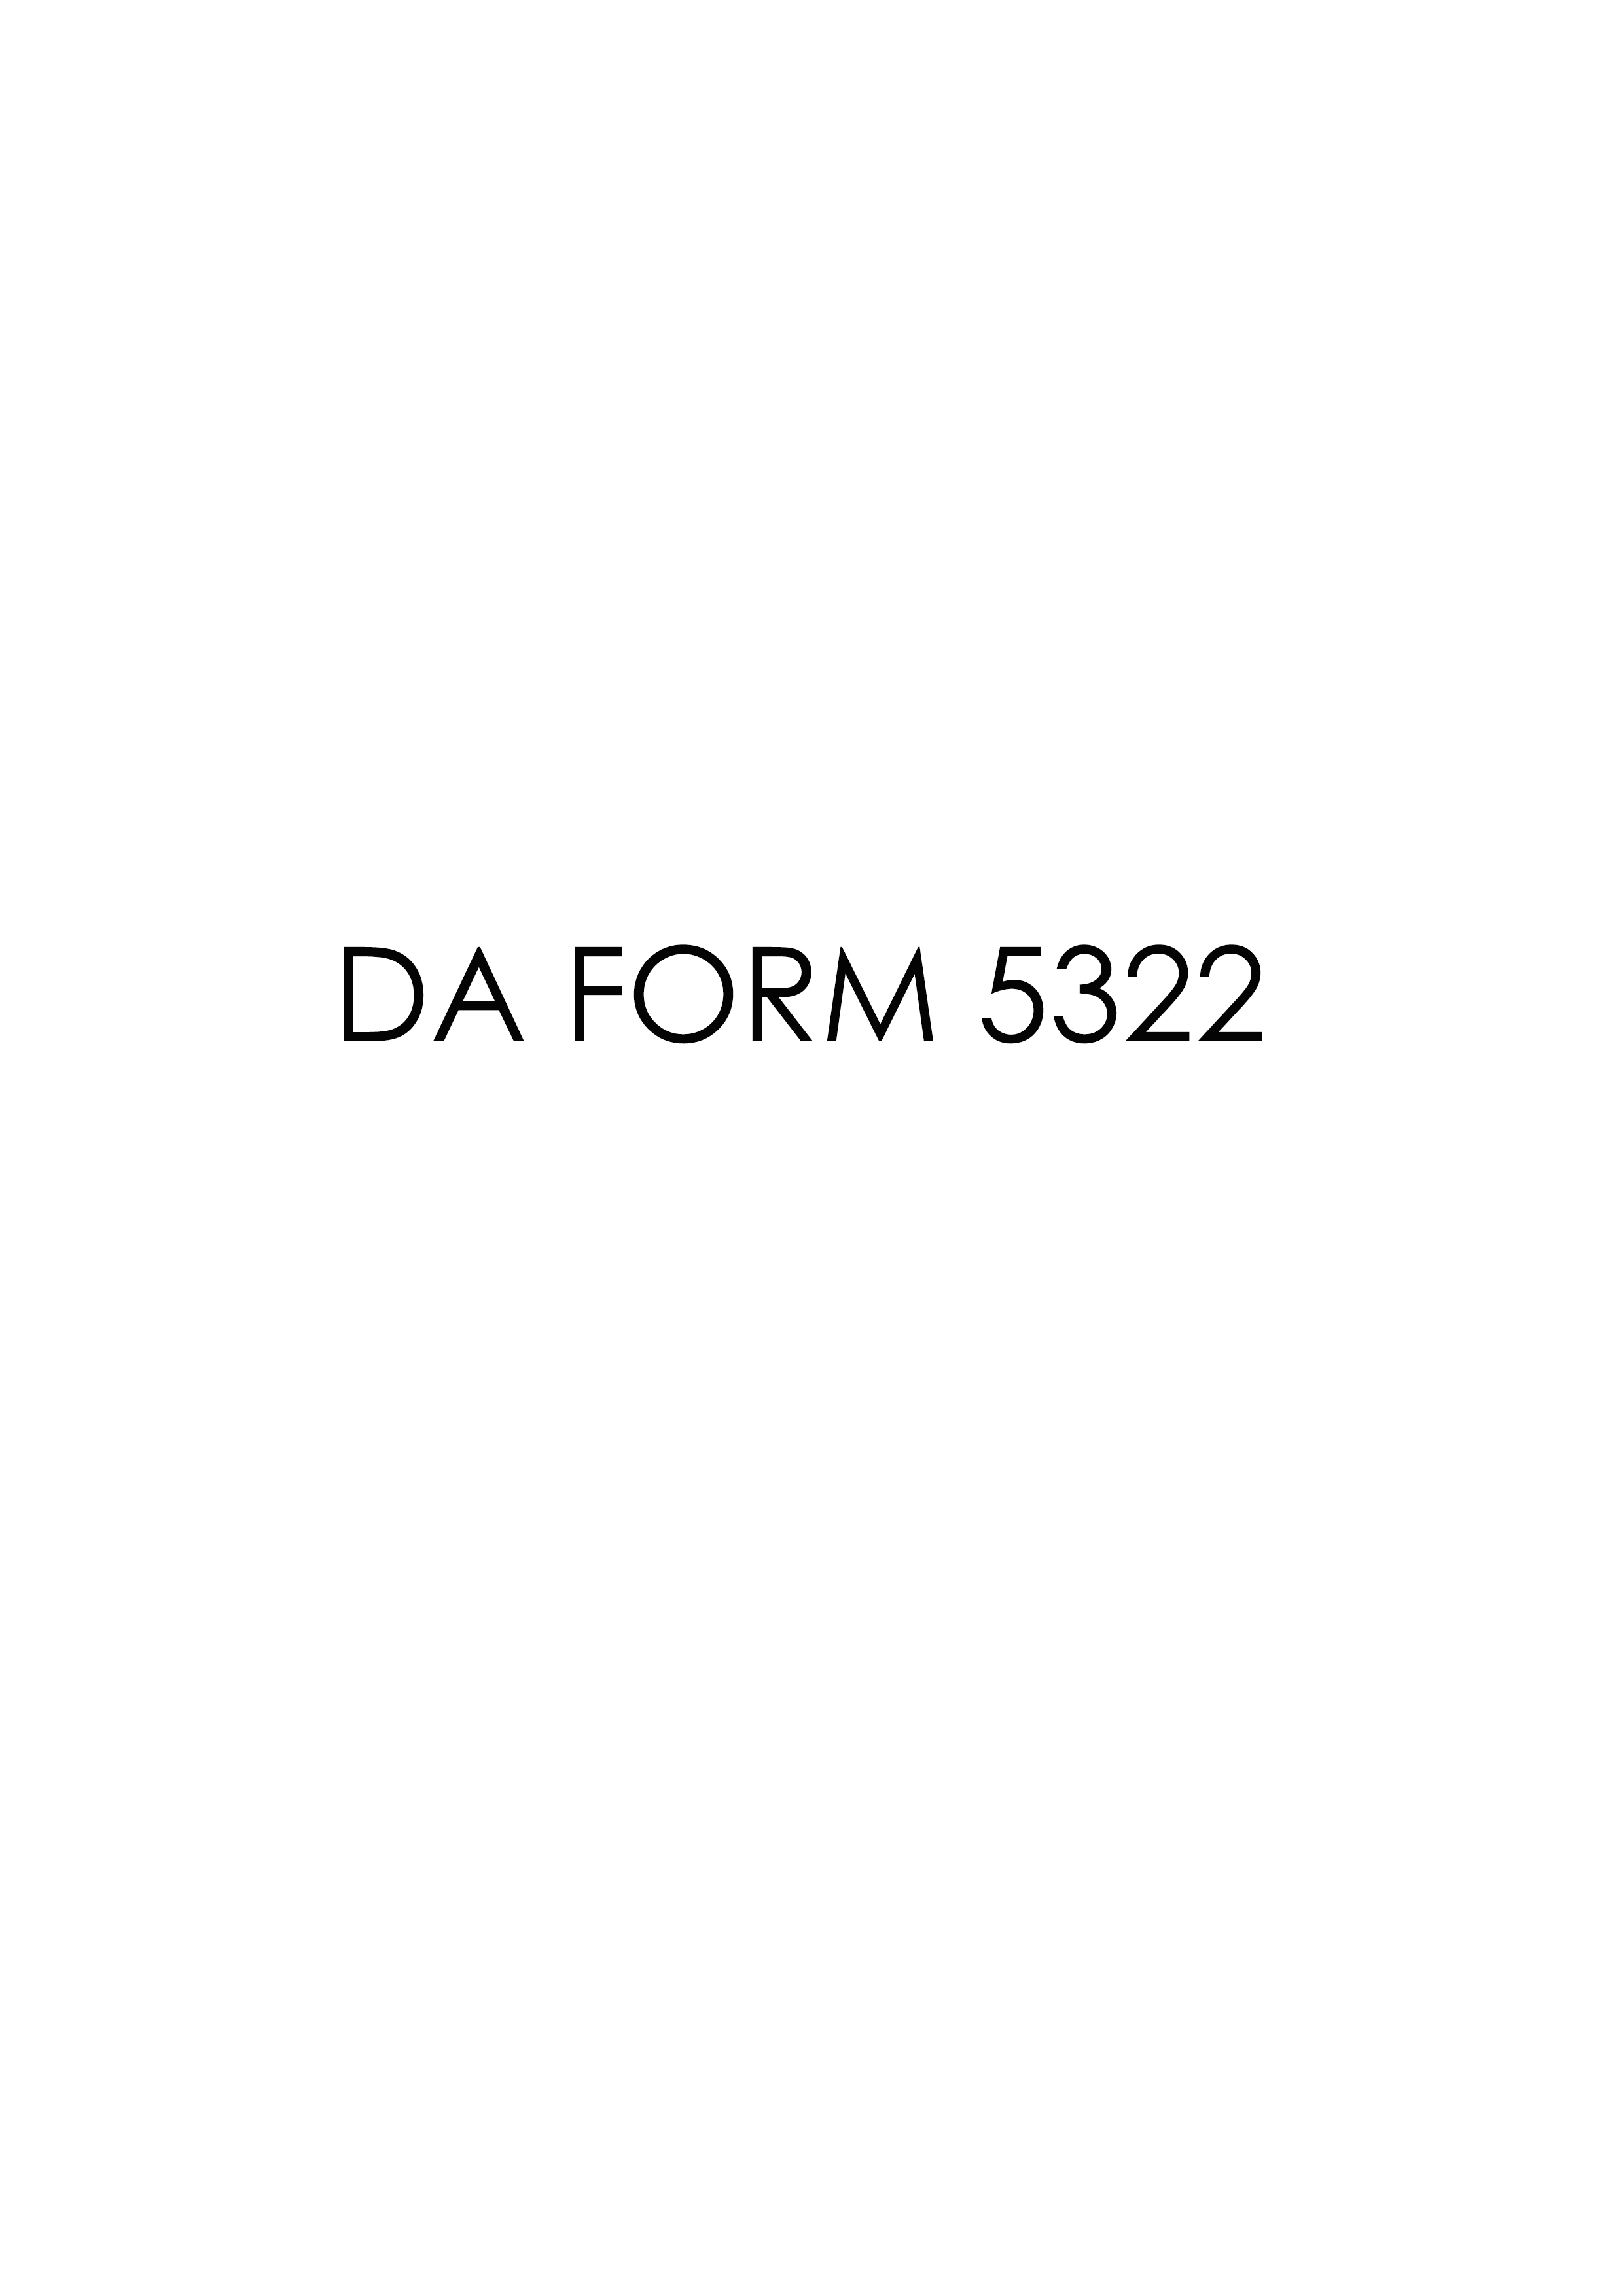 da Form 5322 fillable